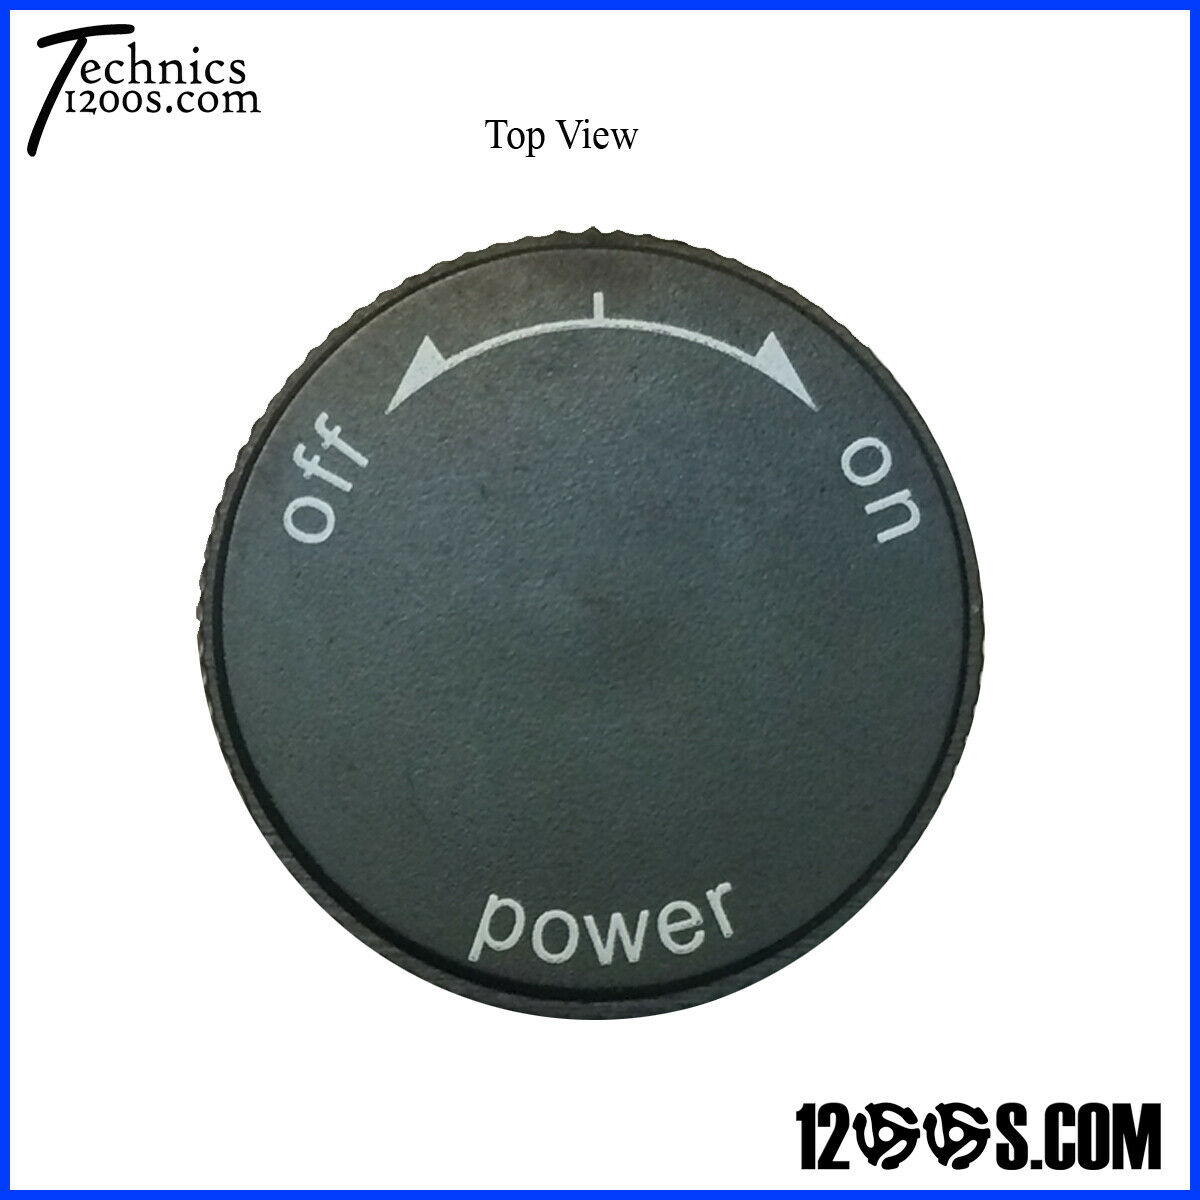 New Power On / Off Knob Top (cap) Fits Technics Sl 1200 1210 Mk2 Turntable